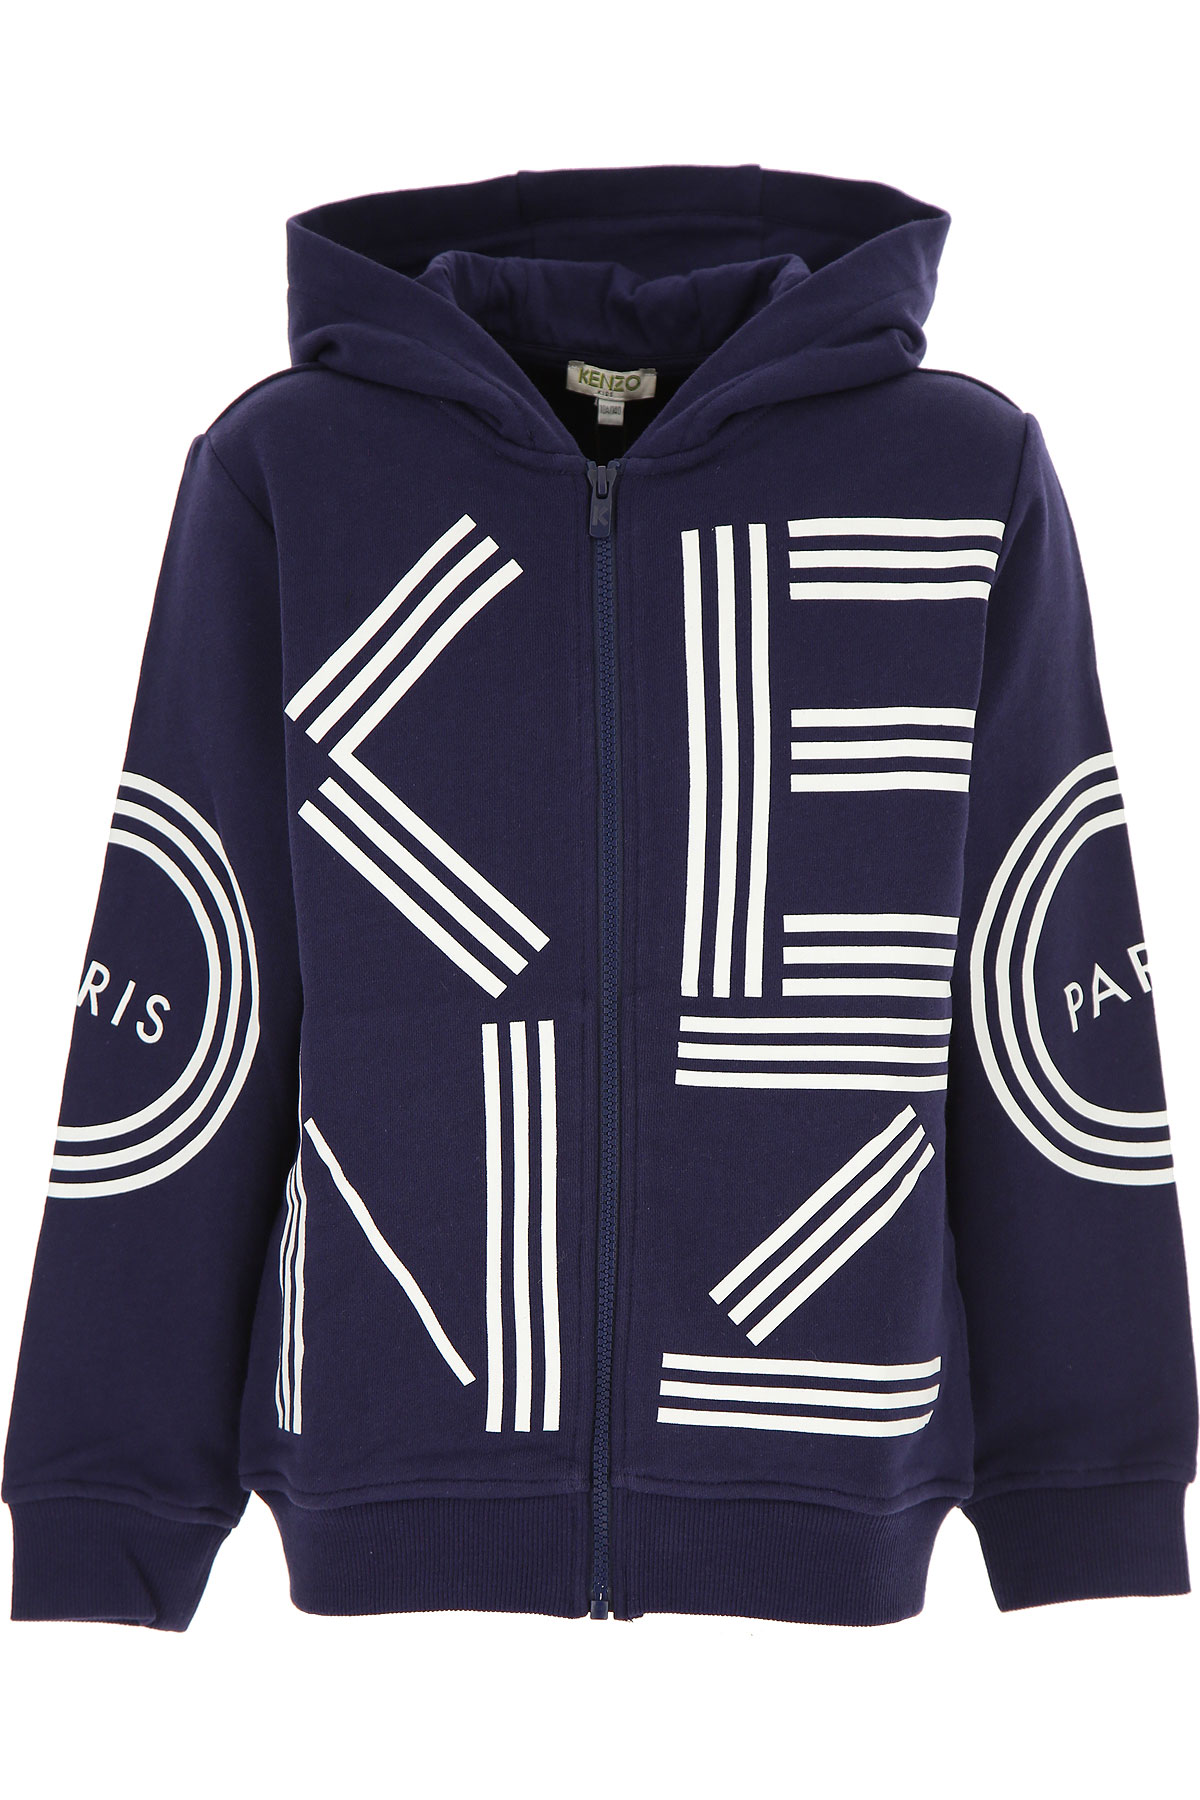 Kenzo Kinder Sweatshirt & Kapuzenpullover für Jungen Günstig im Sale, Blau, Baumwolle, 2017, 12Y 14Y 3Y 4Y 8Y